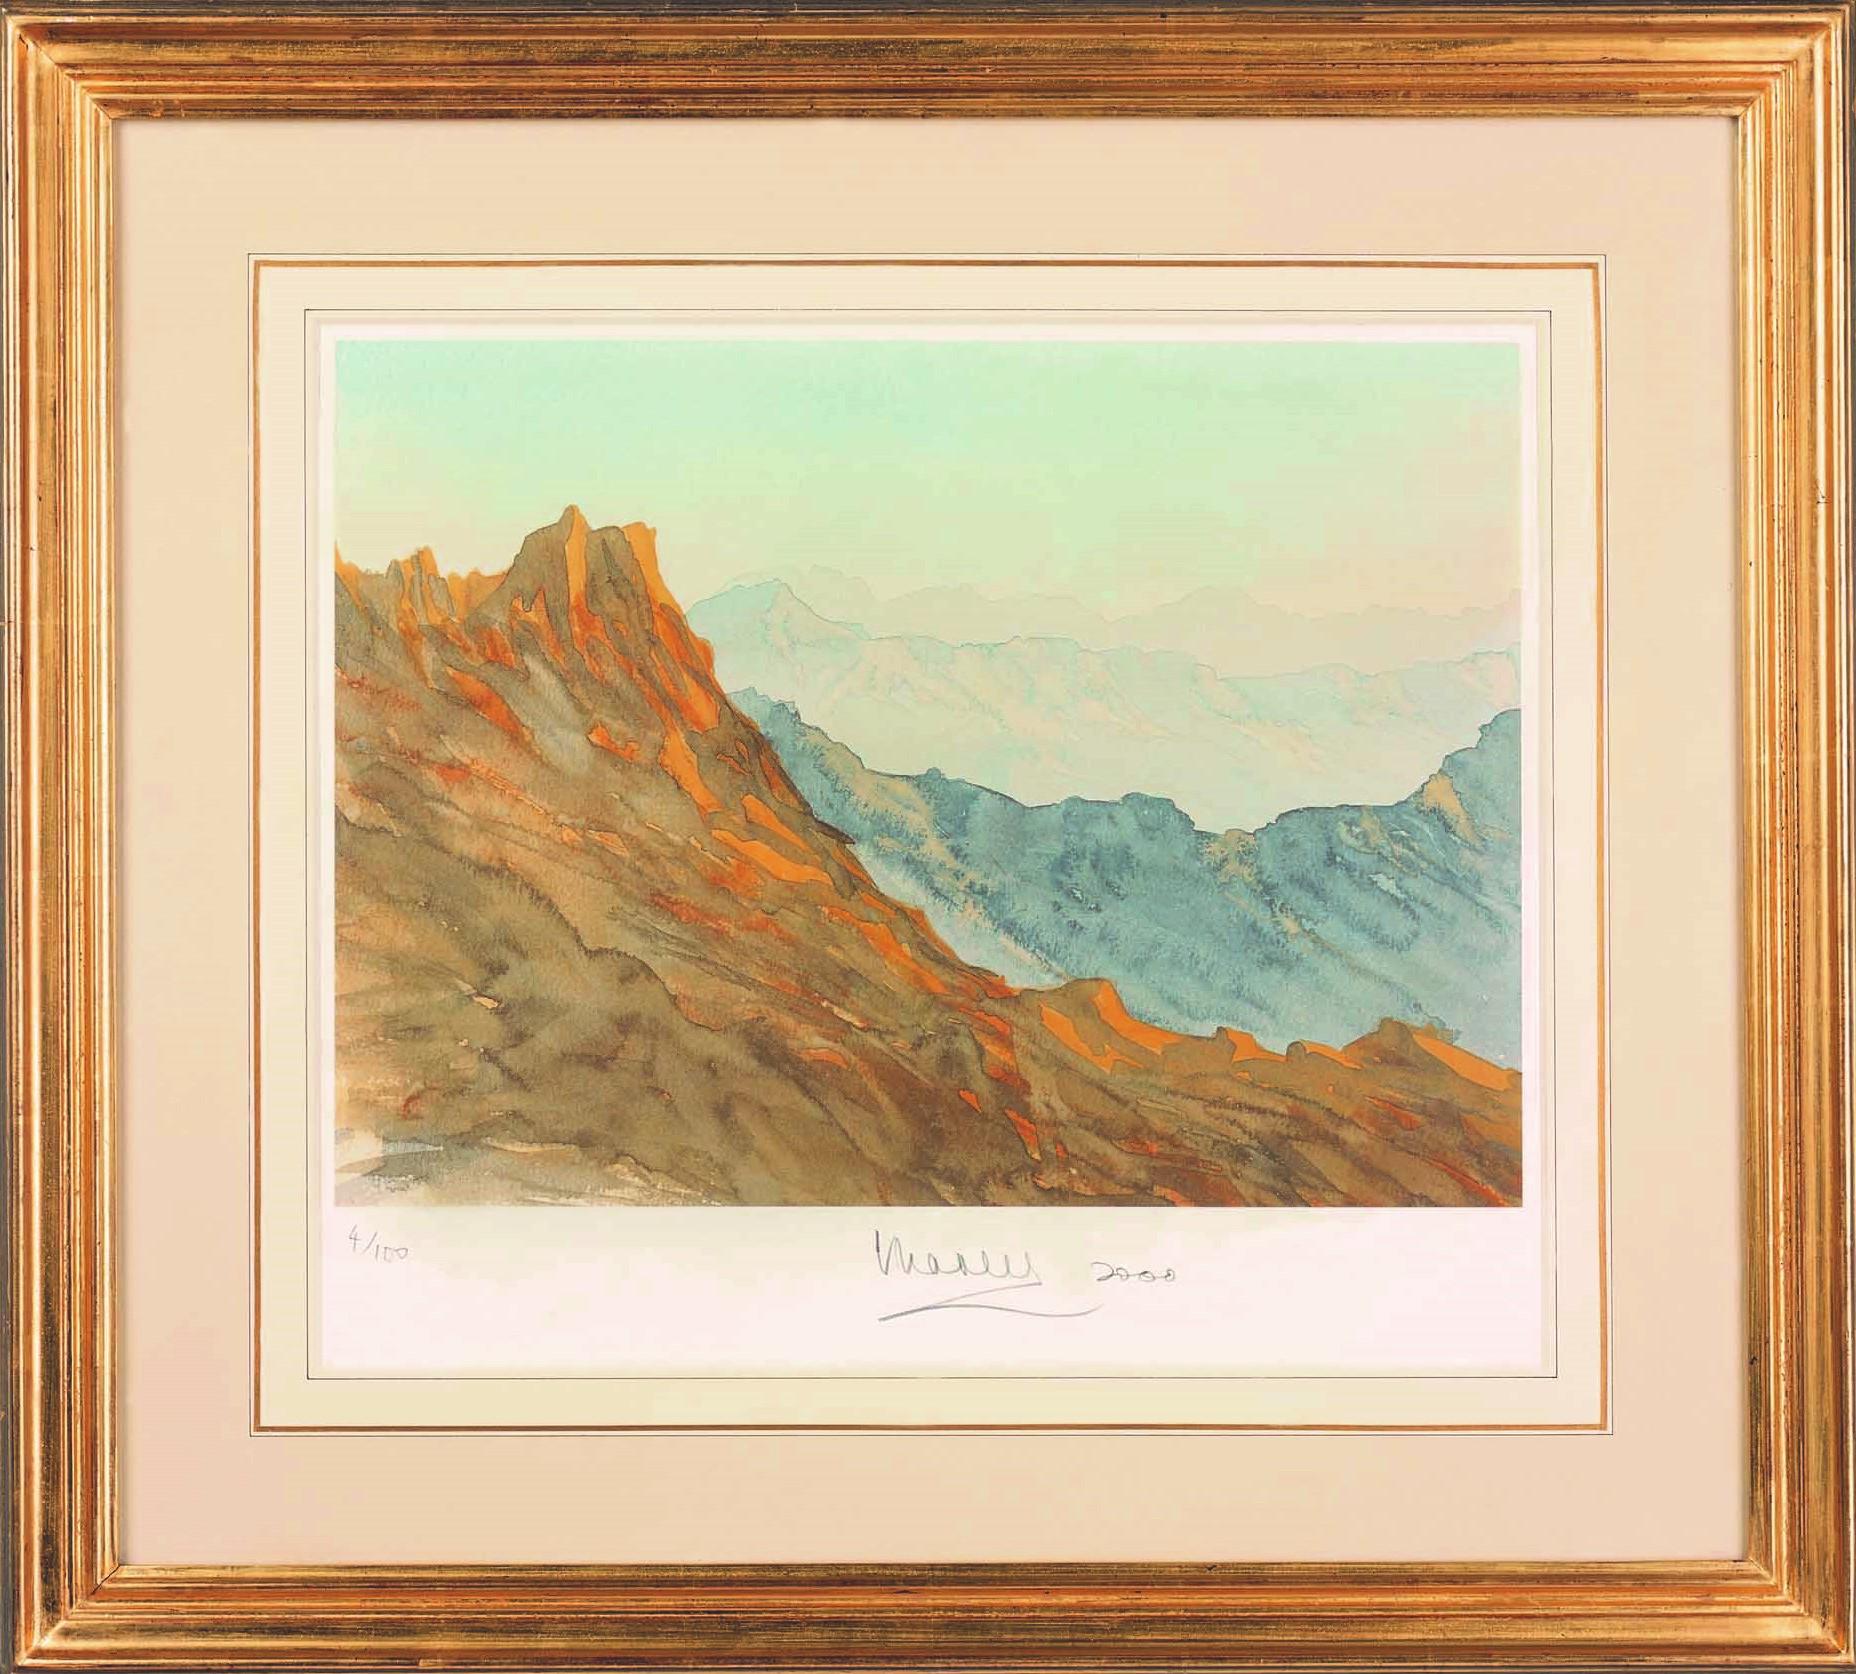 Overlooking Wadi, Saudi Arabia - Signed Lithograph, Royal Art, Mountains, Asir - Print by His Majesty King Charles III